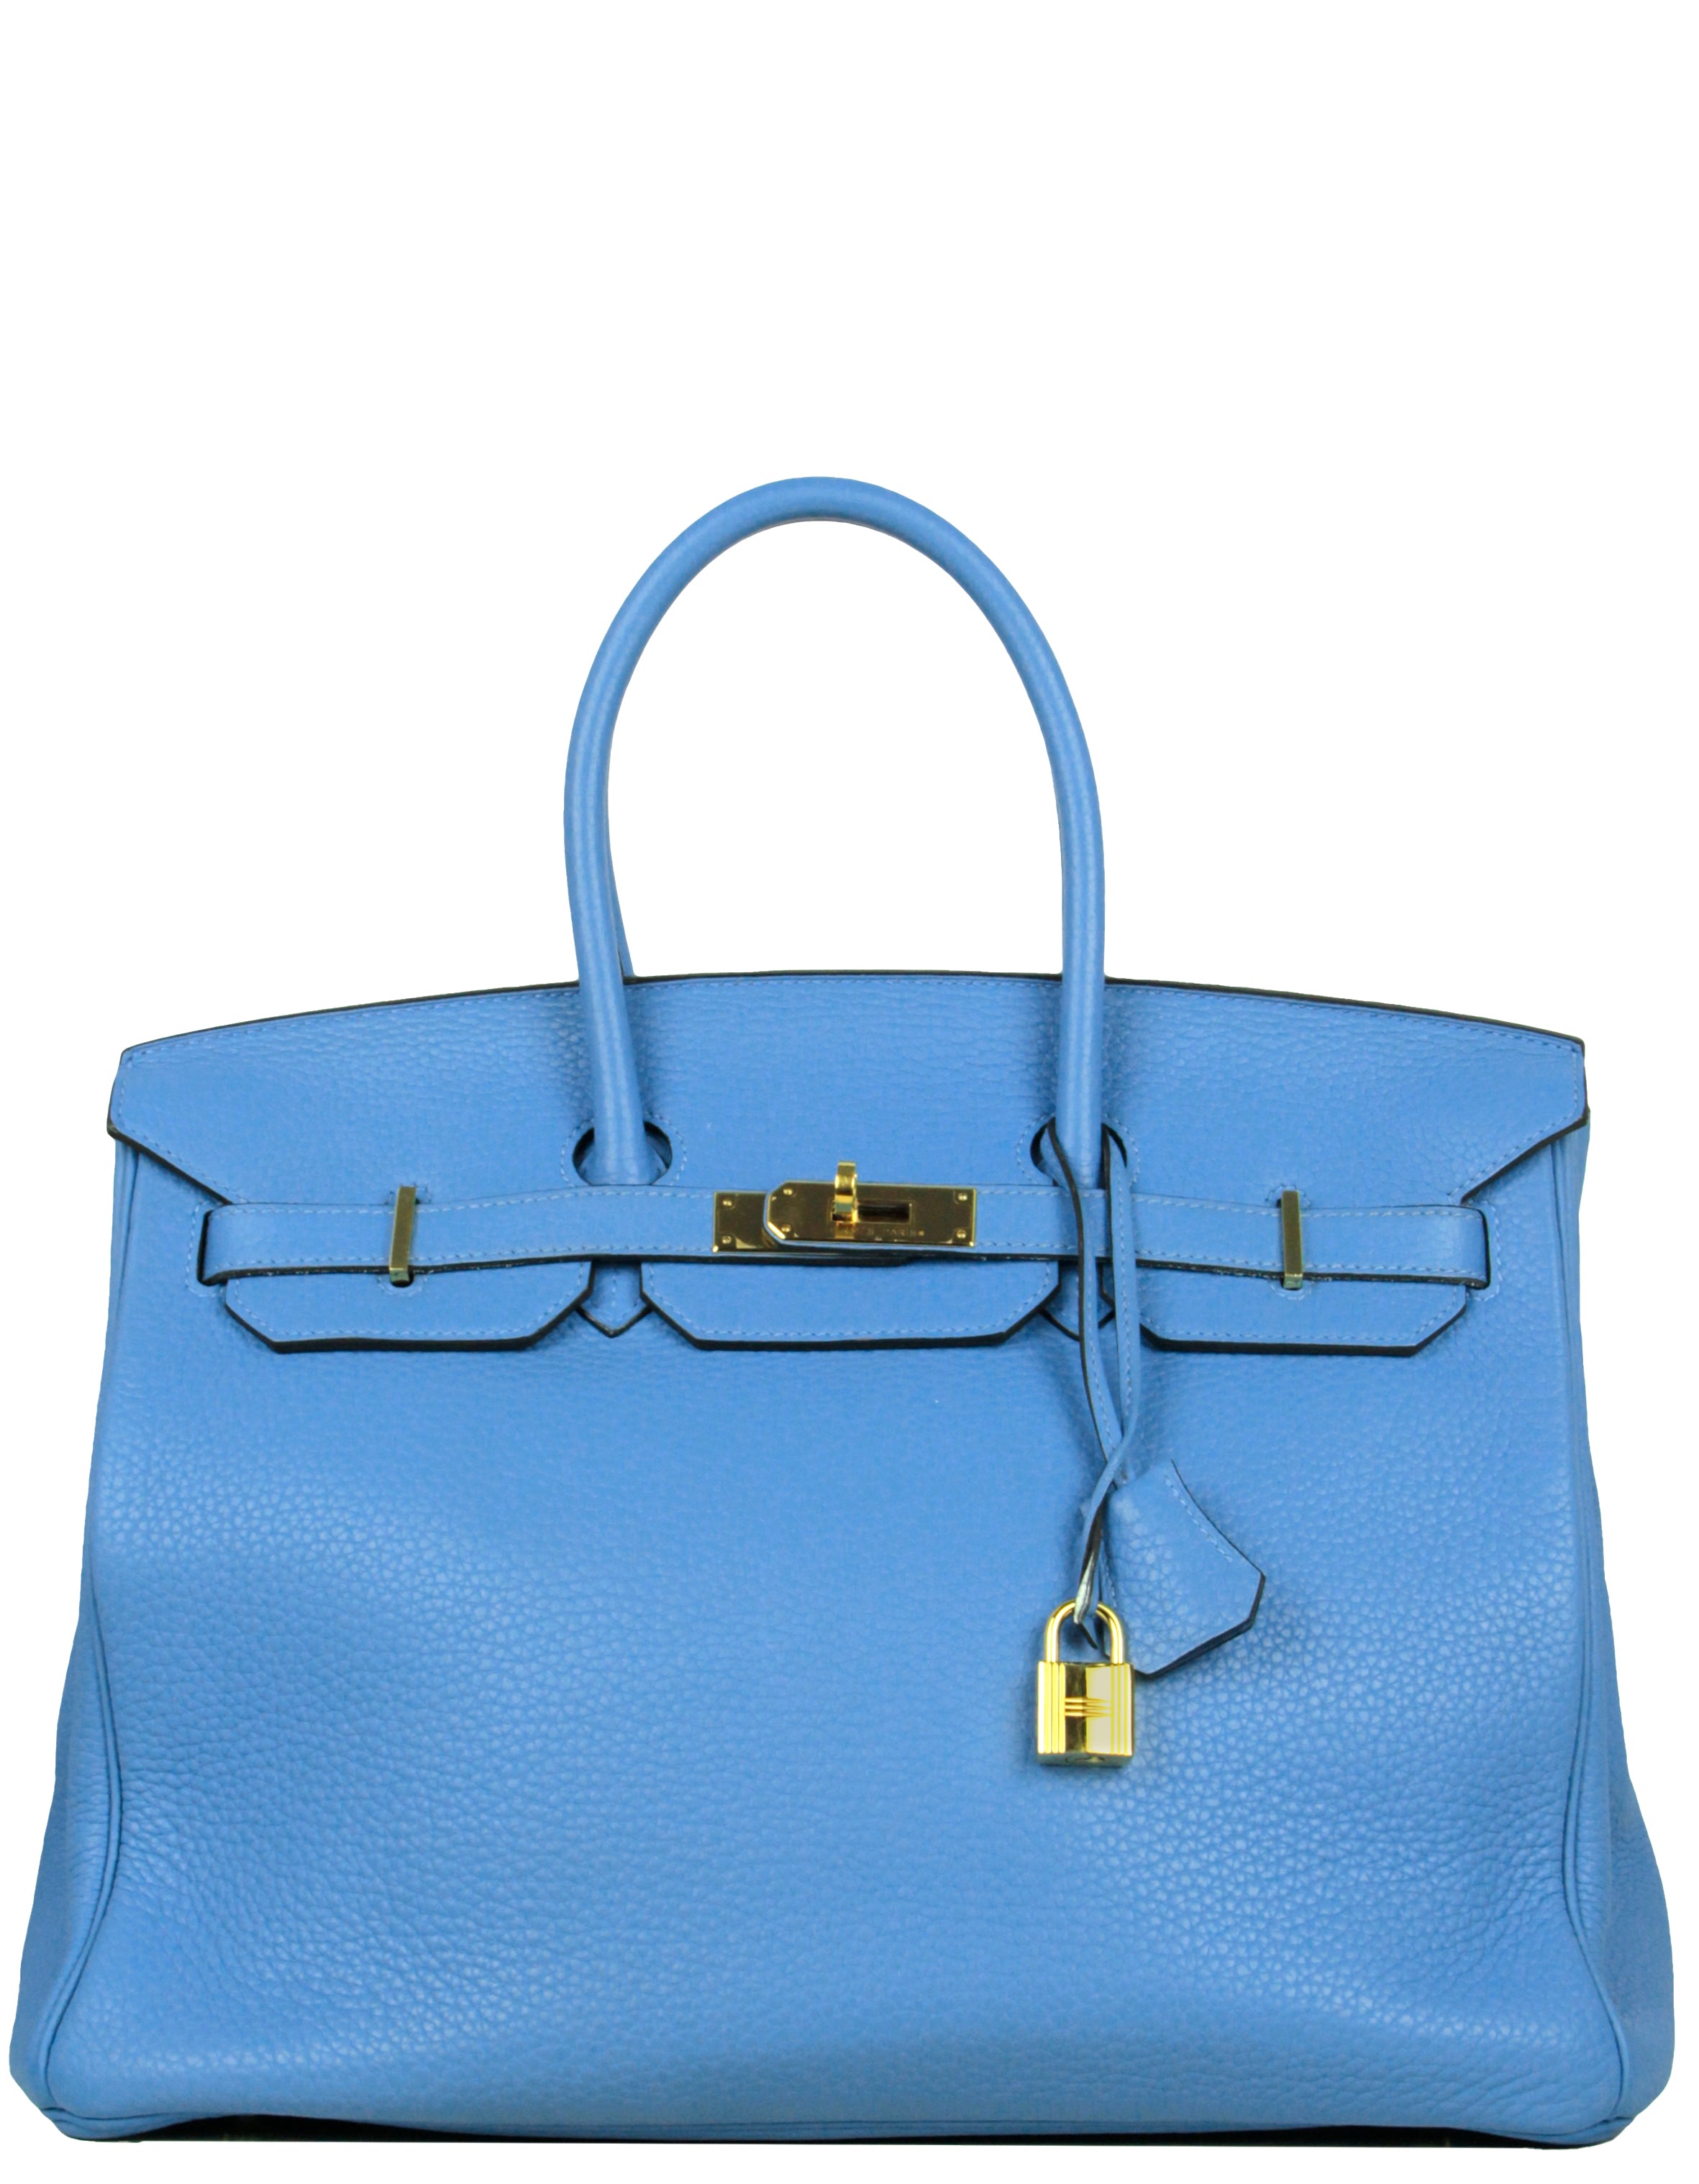 Hermes, Bags, Brand New In August Hermes Birkin 25 Togo Ghw